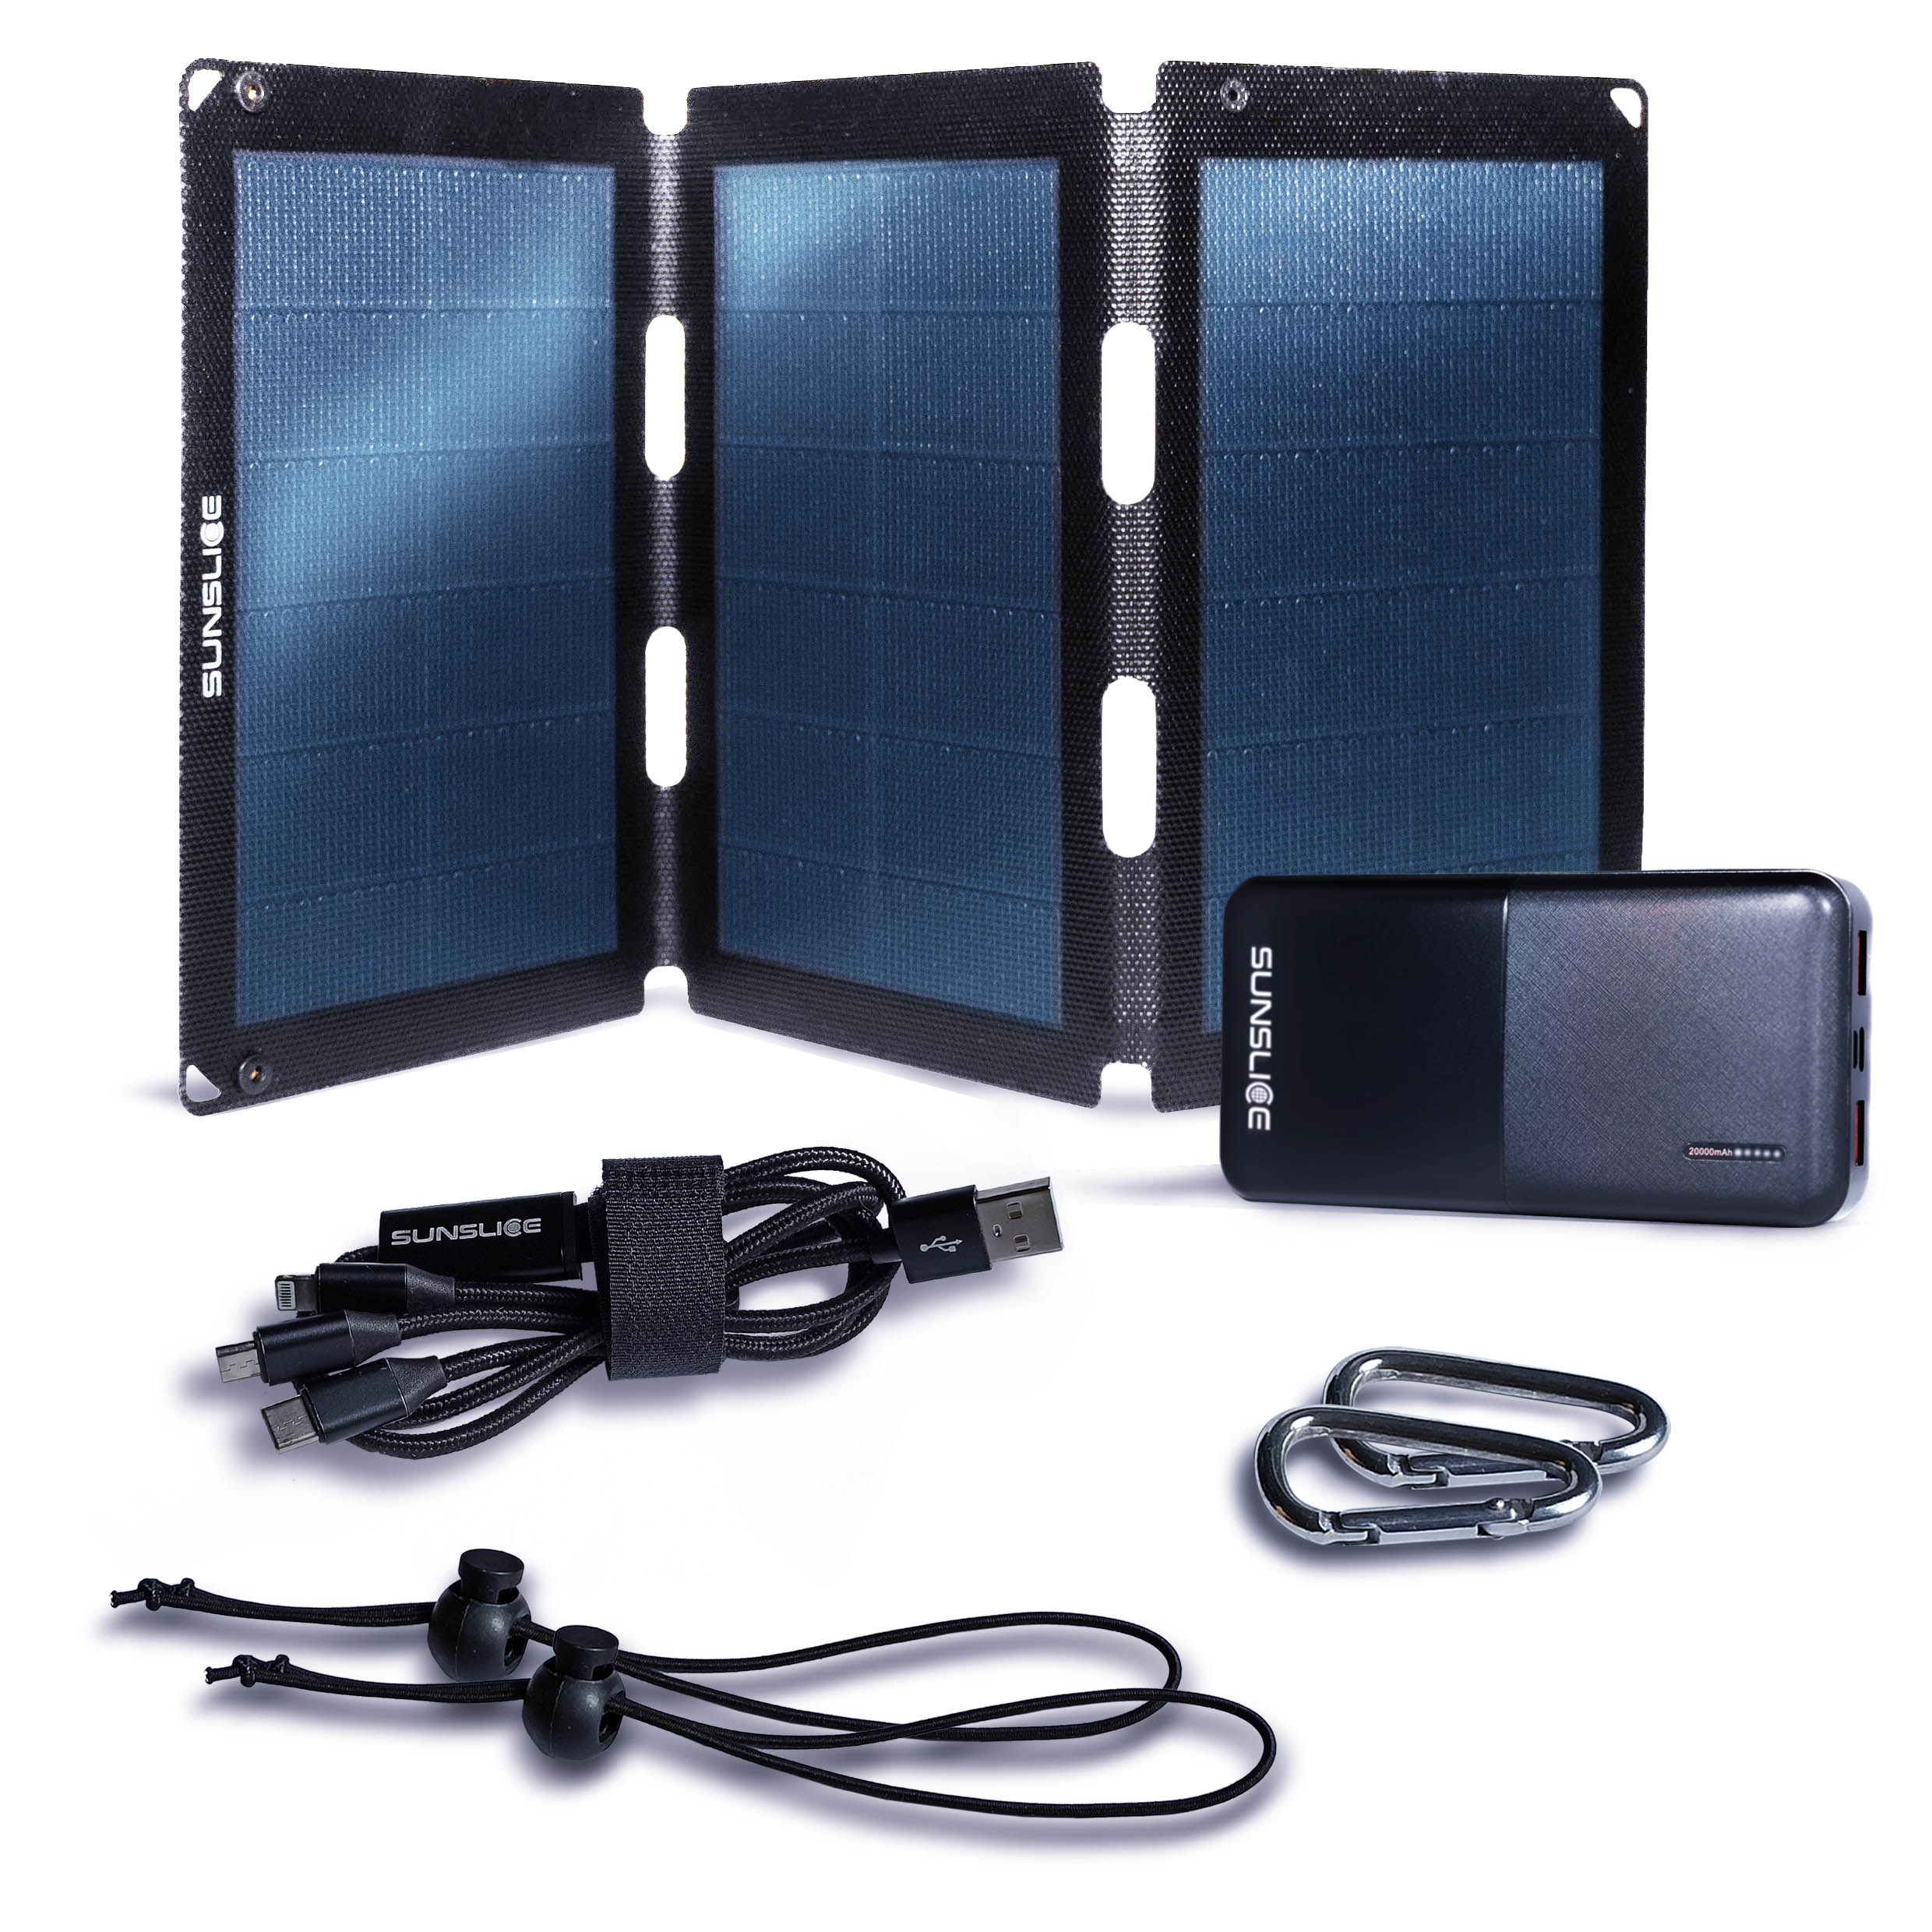 sunslice tragbares 18-Watt-Solarpanel und 20000mAh Powerbank Nomad Kit